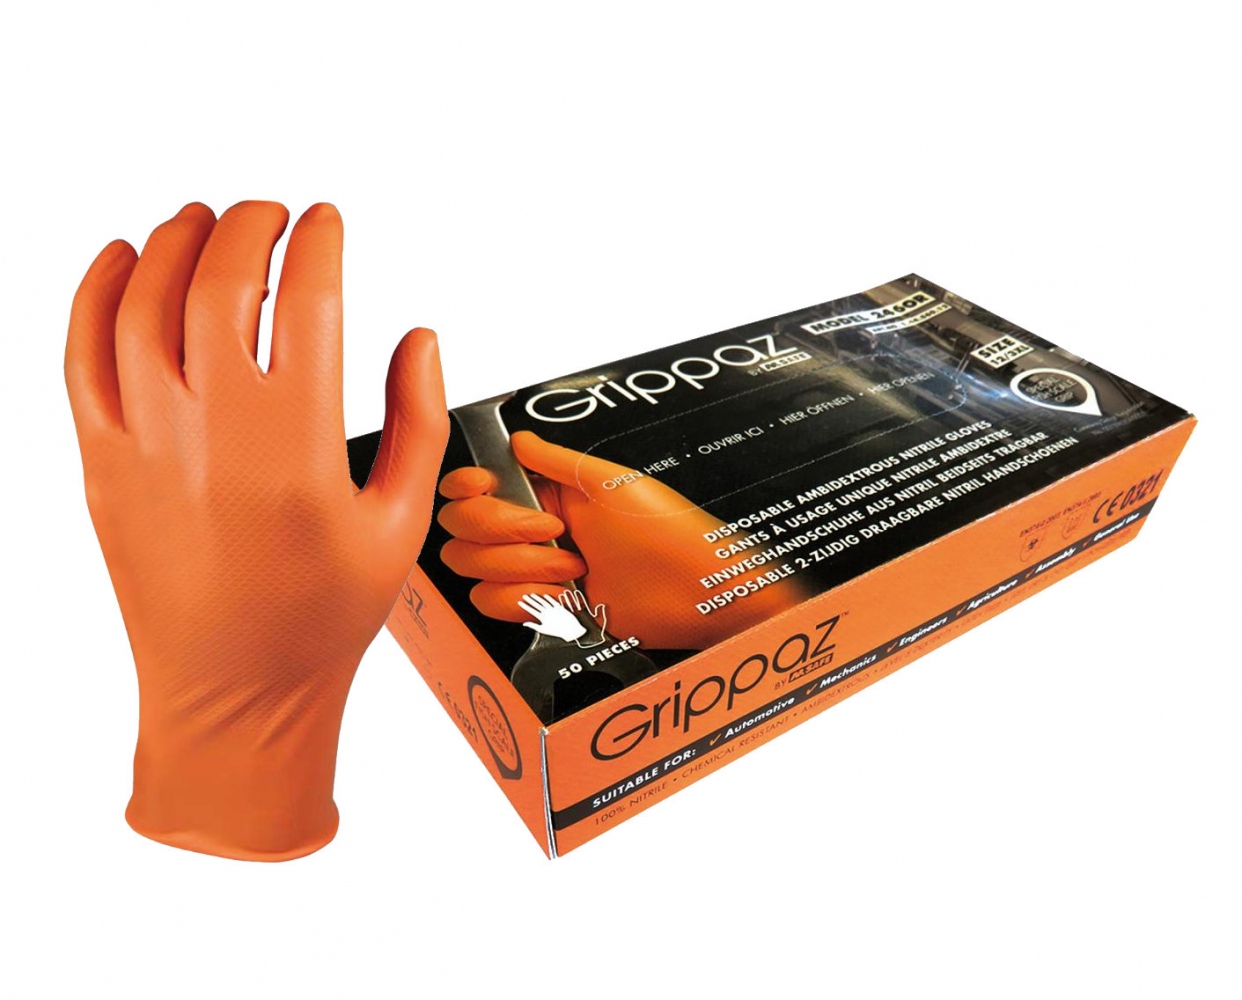 Traction Grip Ambidextrous37302 XL Grippaz Nitrile Gloves Box of 50